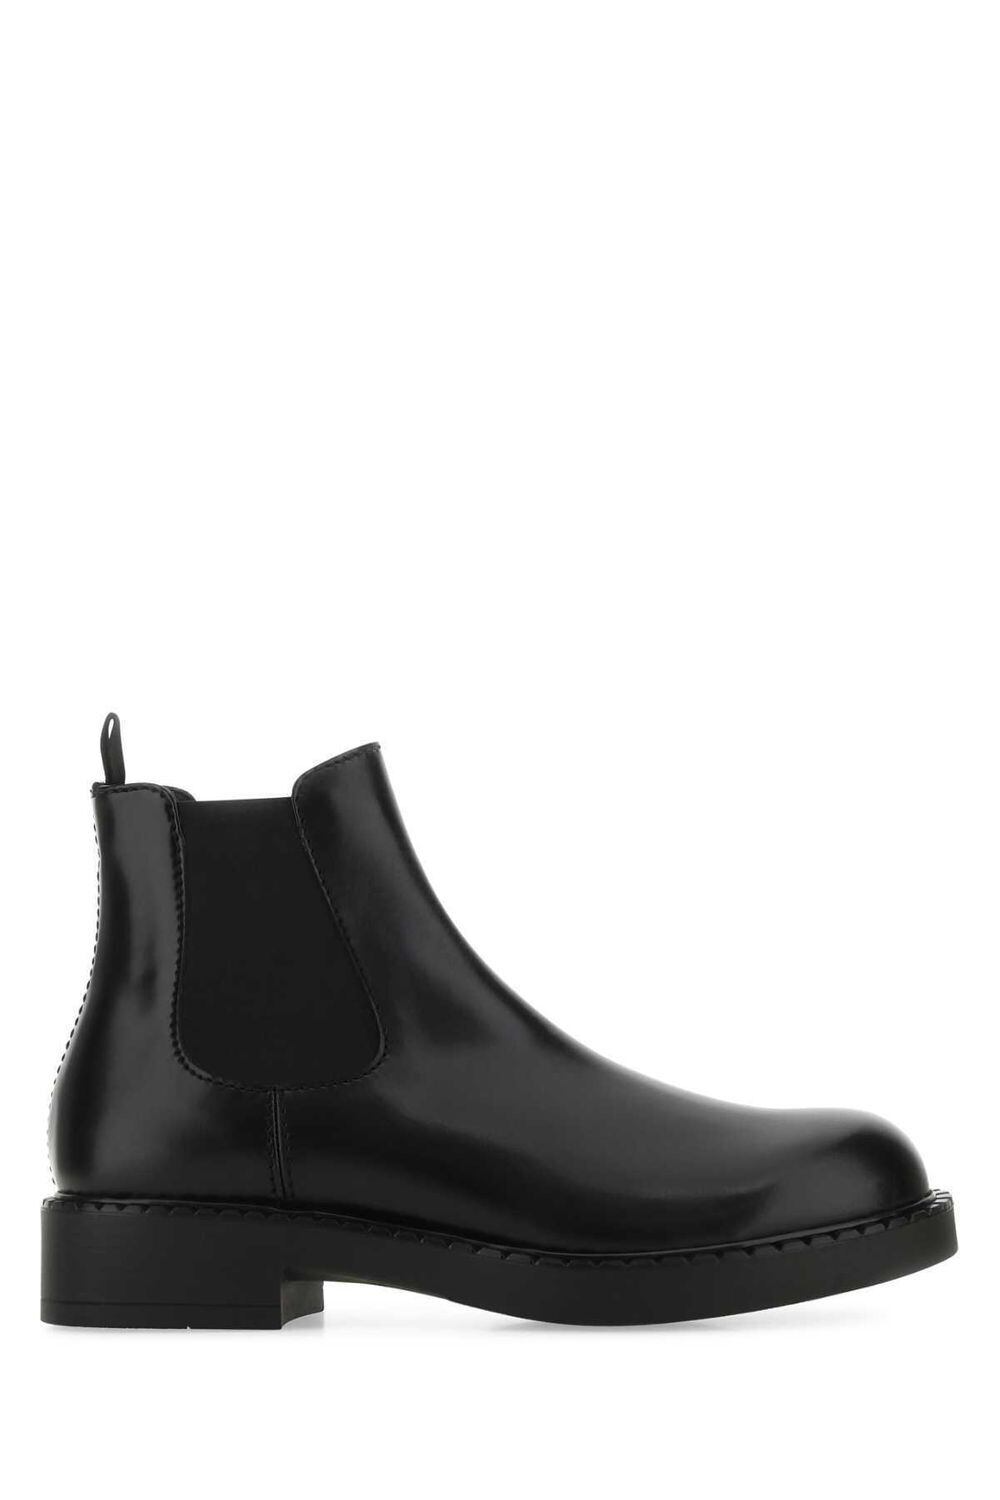 Prada leather Chelsea boots